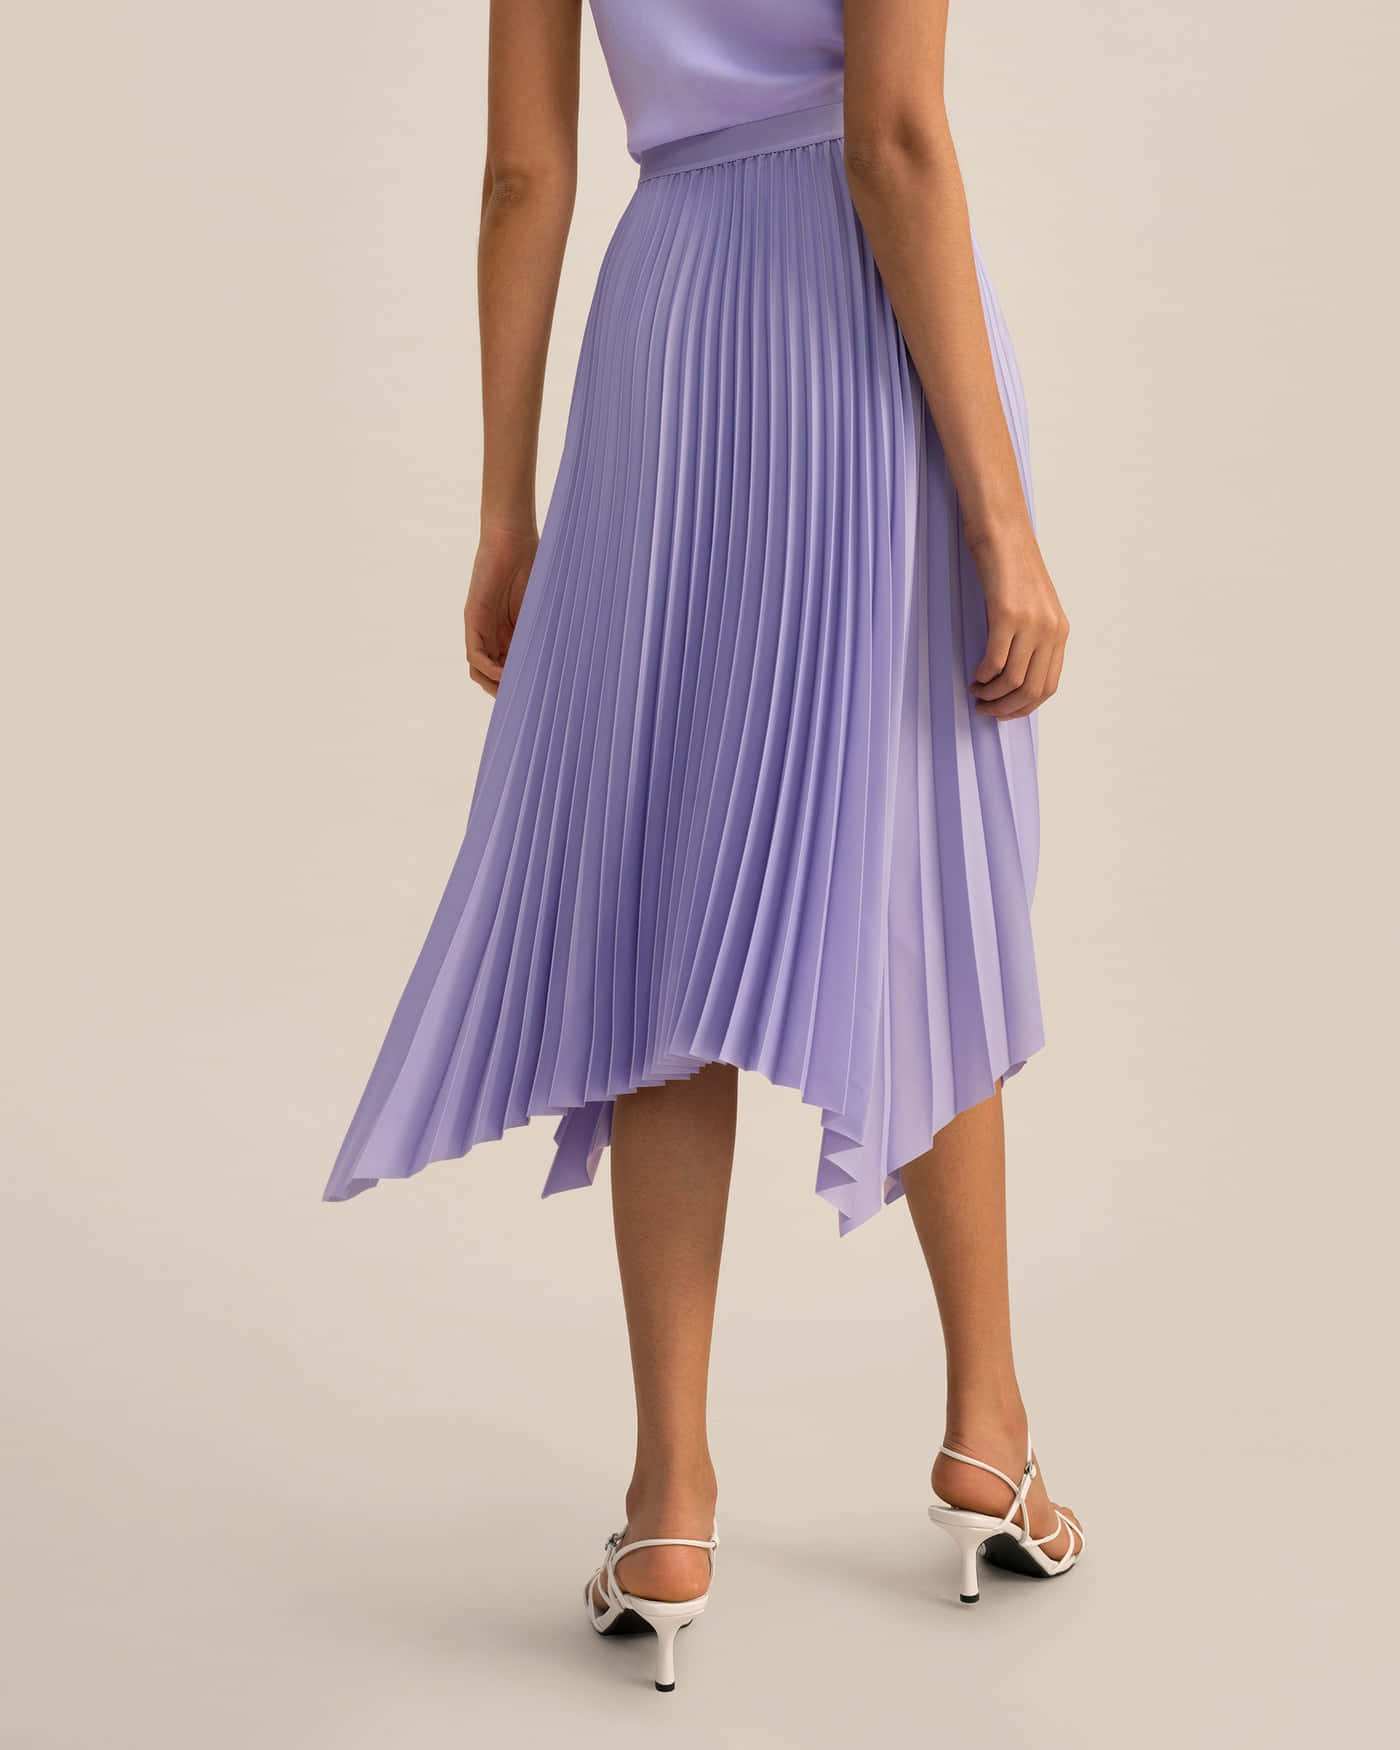 Look stylish this season in a Purple Skirt Wallpaper